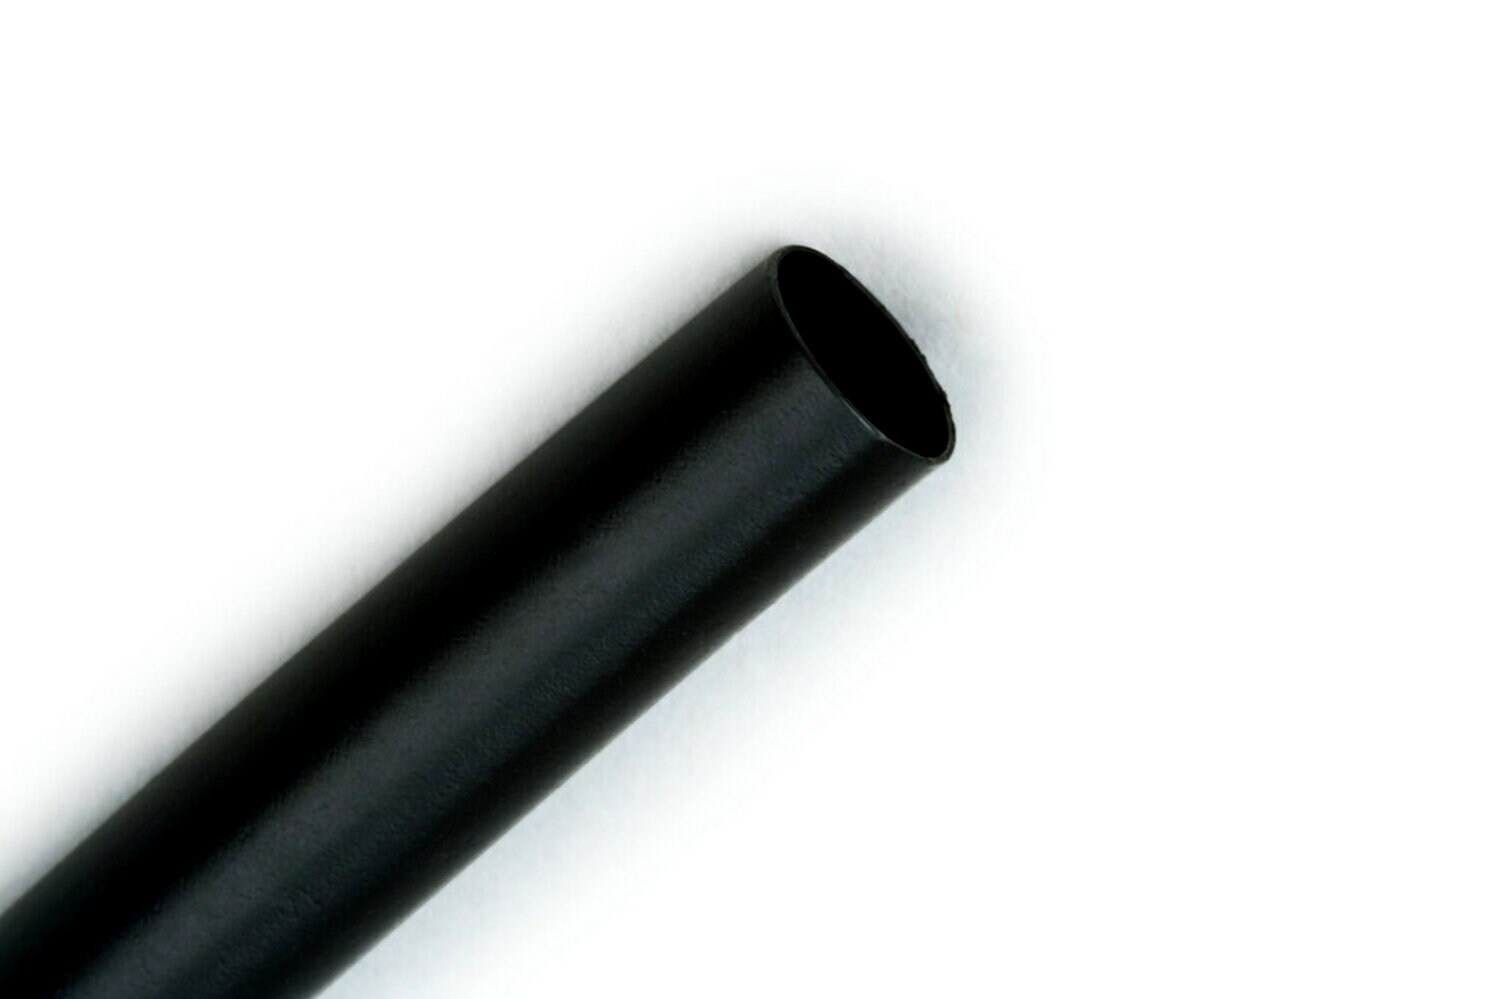 7010320049 - 3M Heat Shrink Thin-Wall Tubing FP-301VW 1/16-Black-1000`: 1000 ft
spool length, 3000 linear ft/box, 3 Rolls/Case